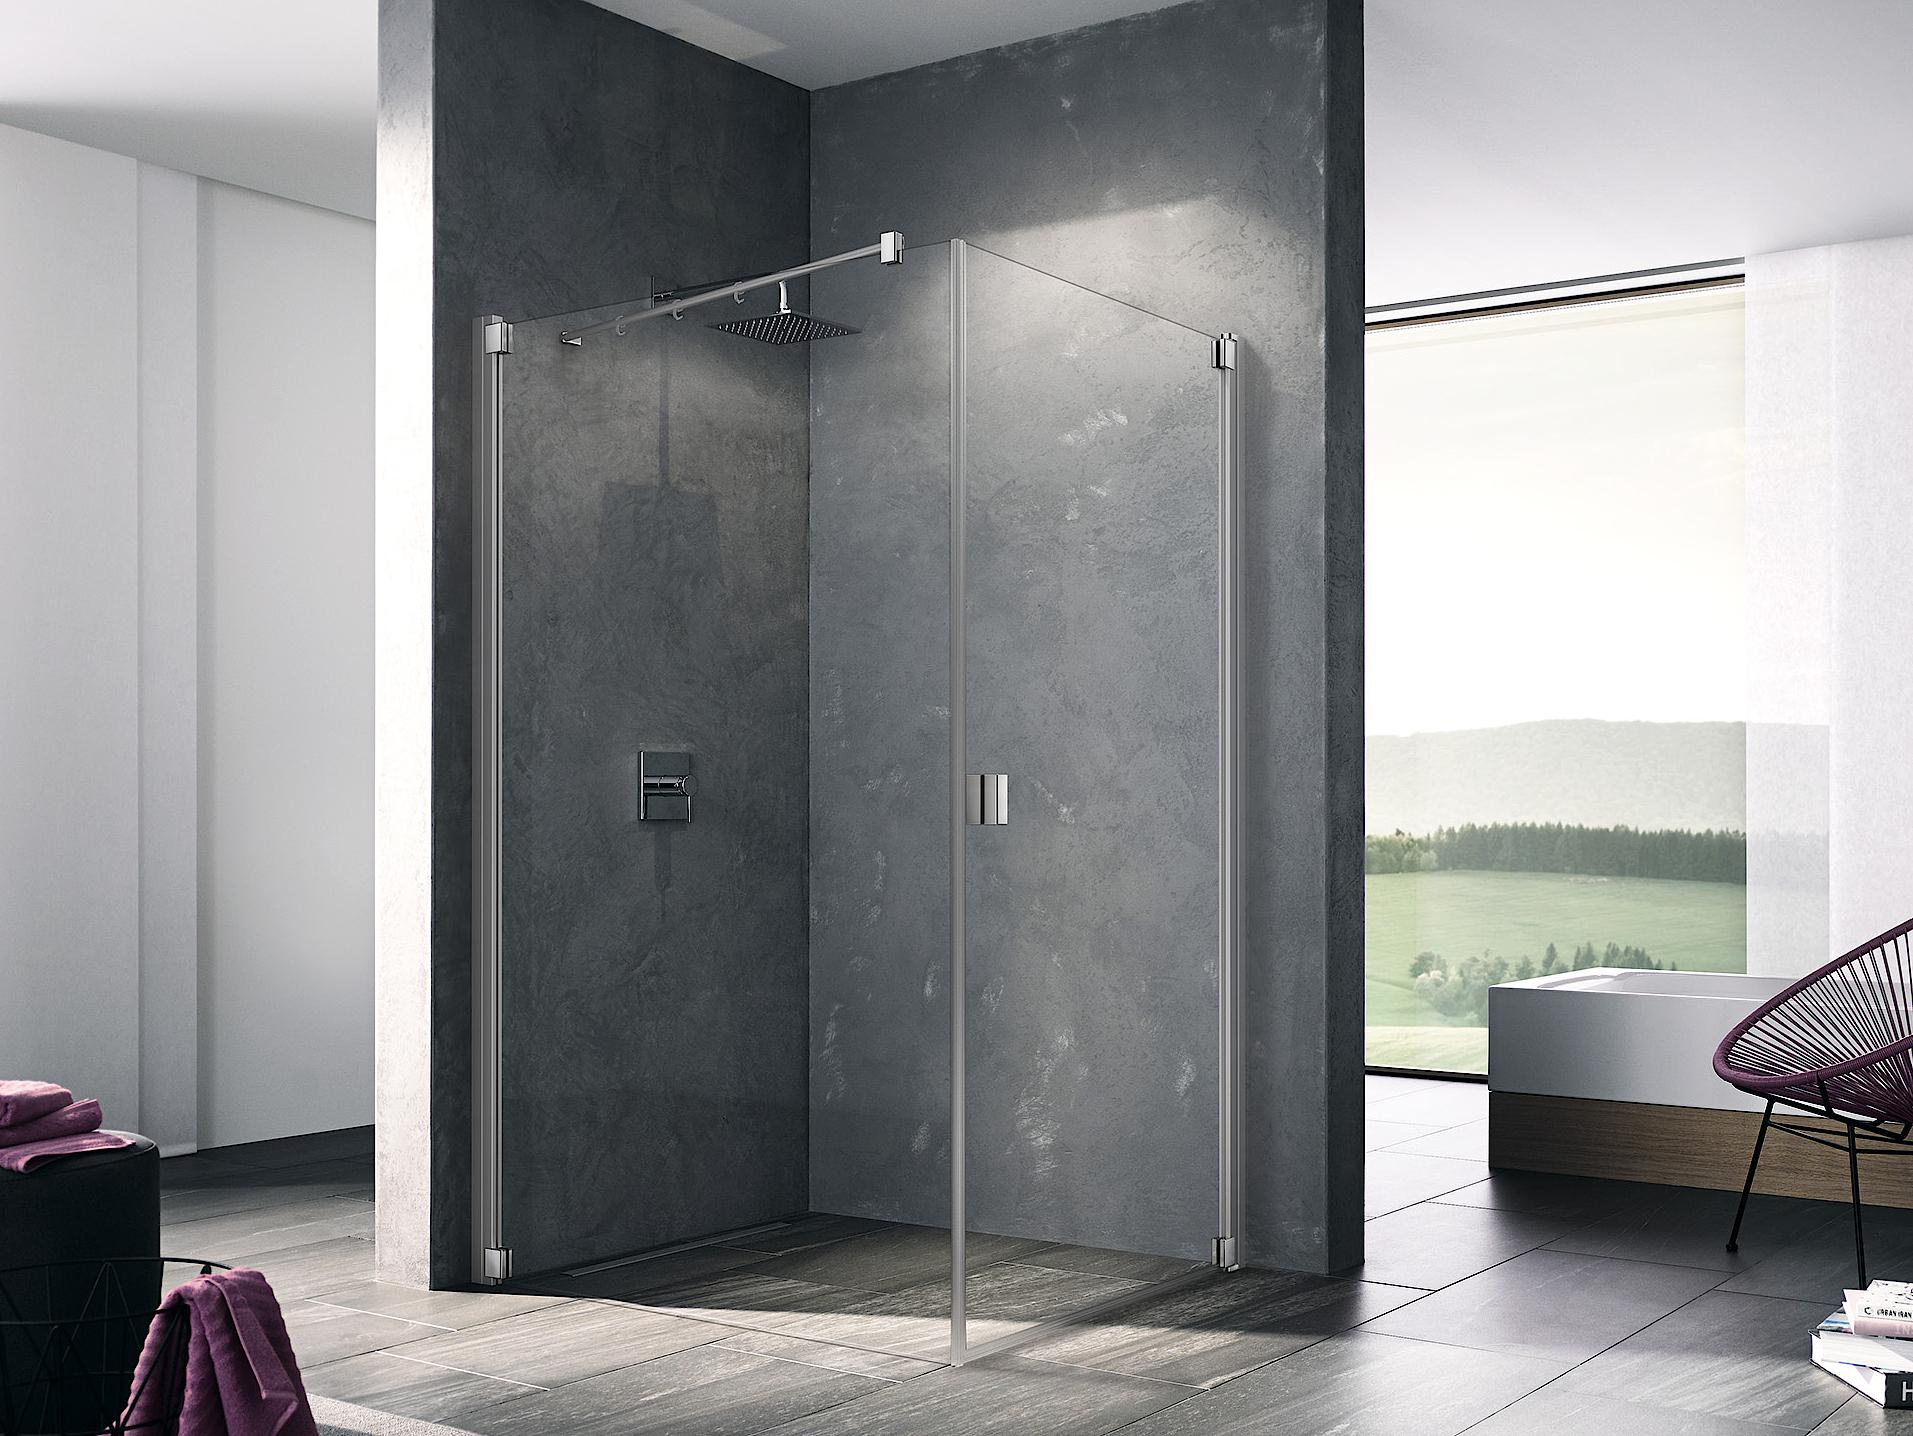 Kermi profile shower enclosure, RAYA single panel hinged door